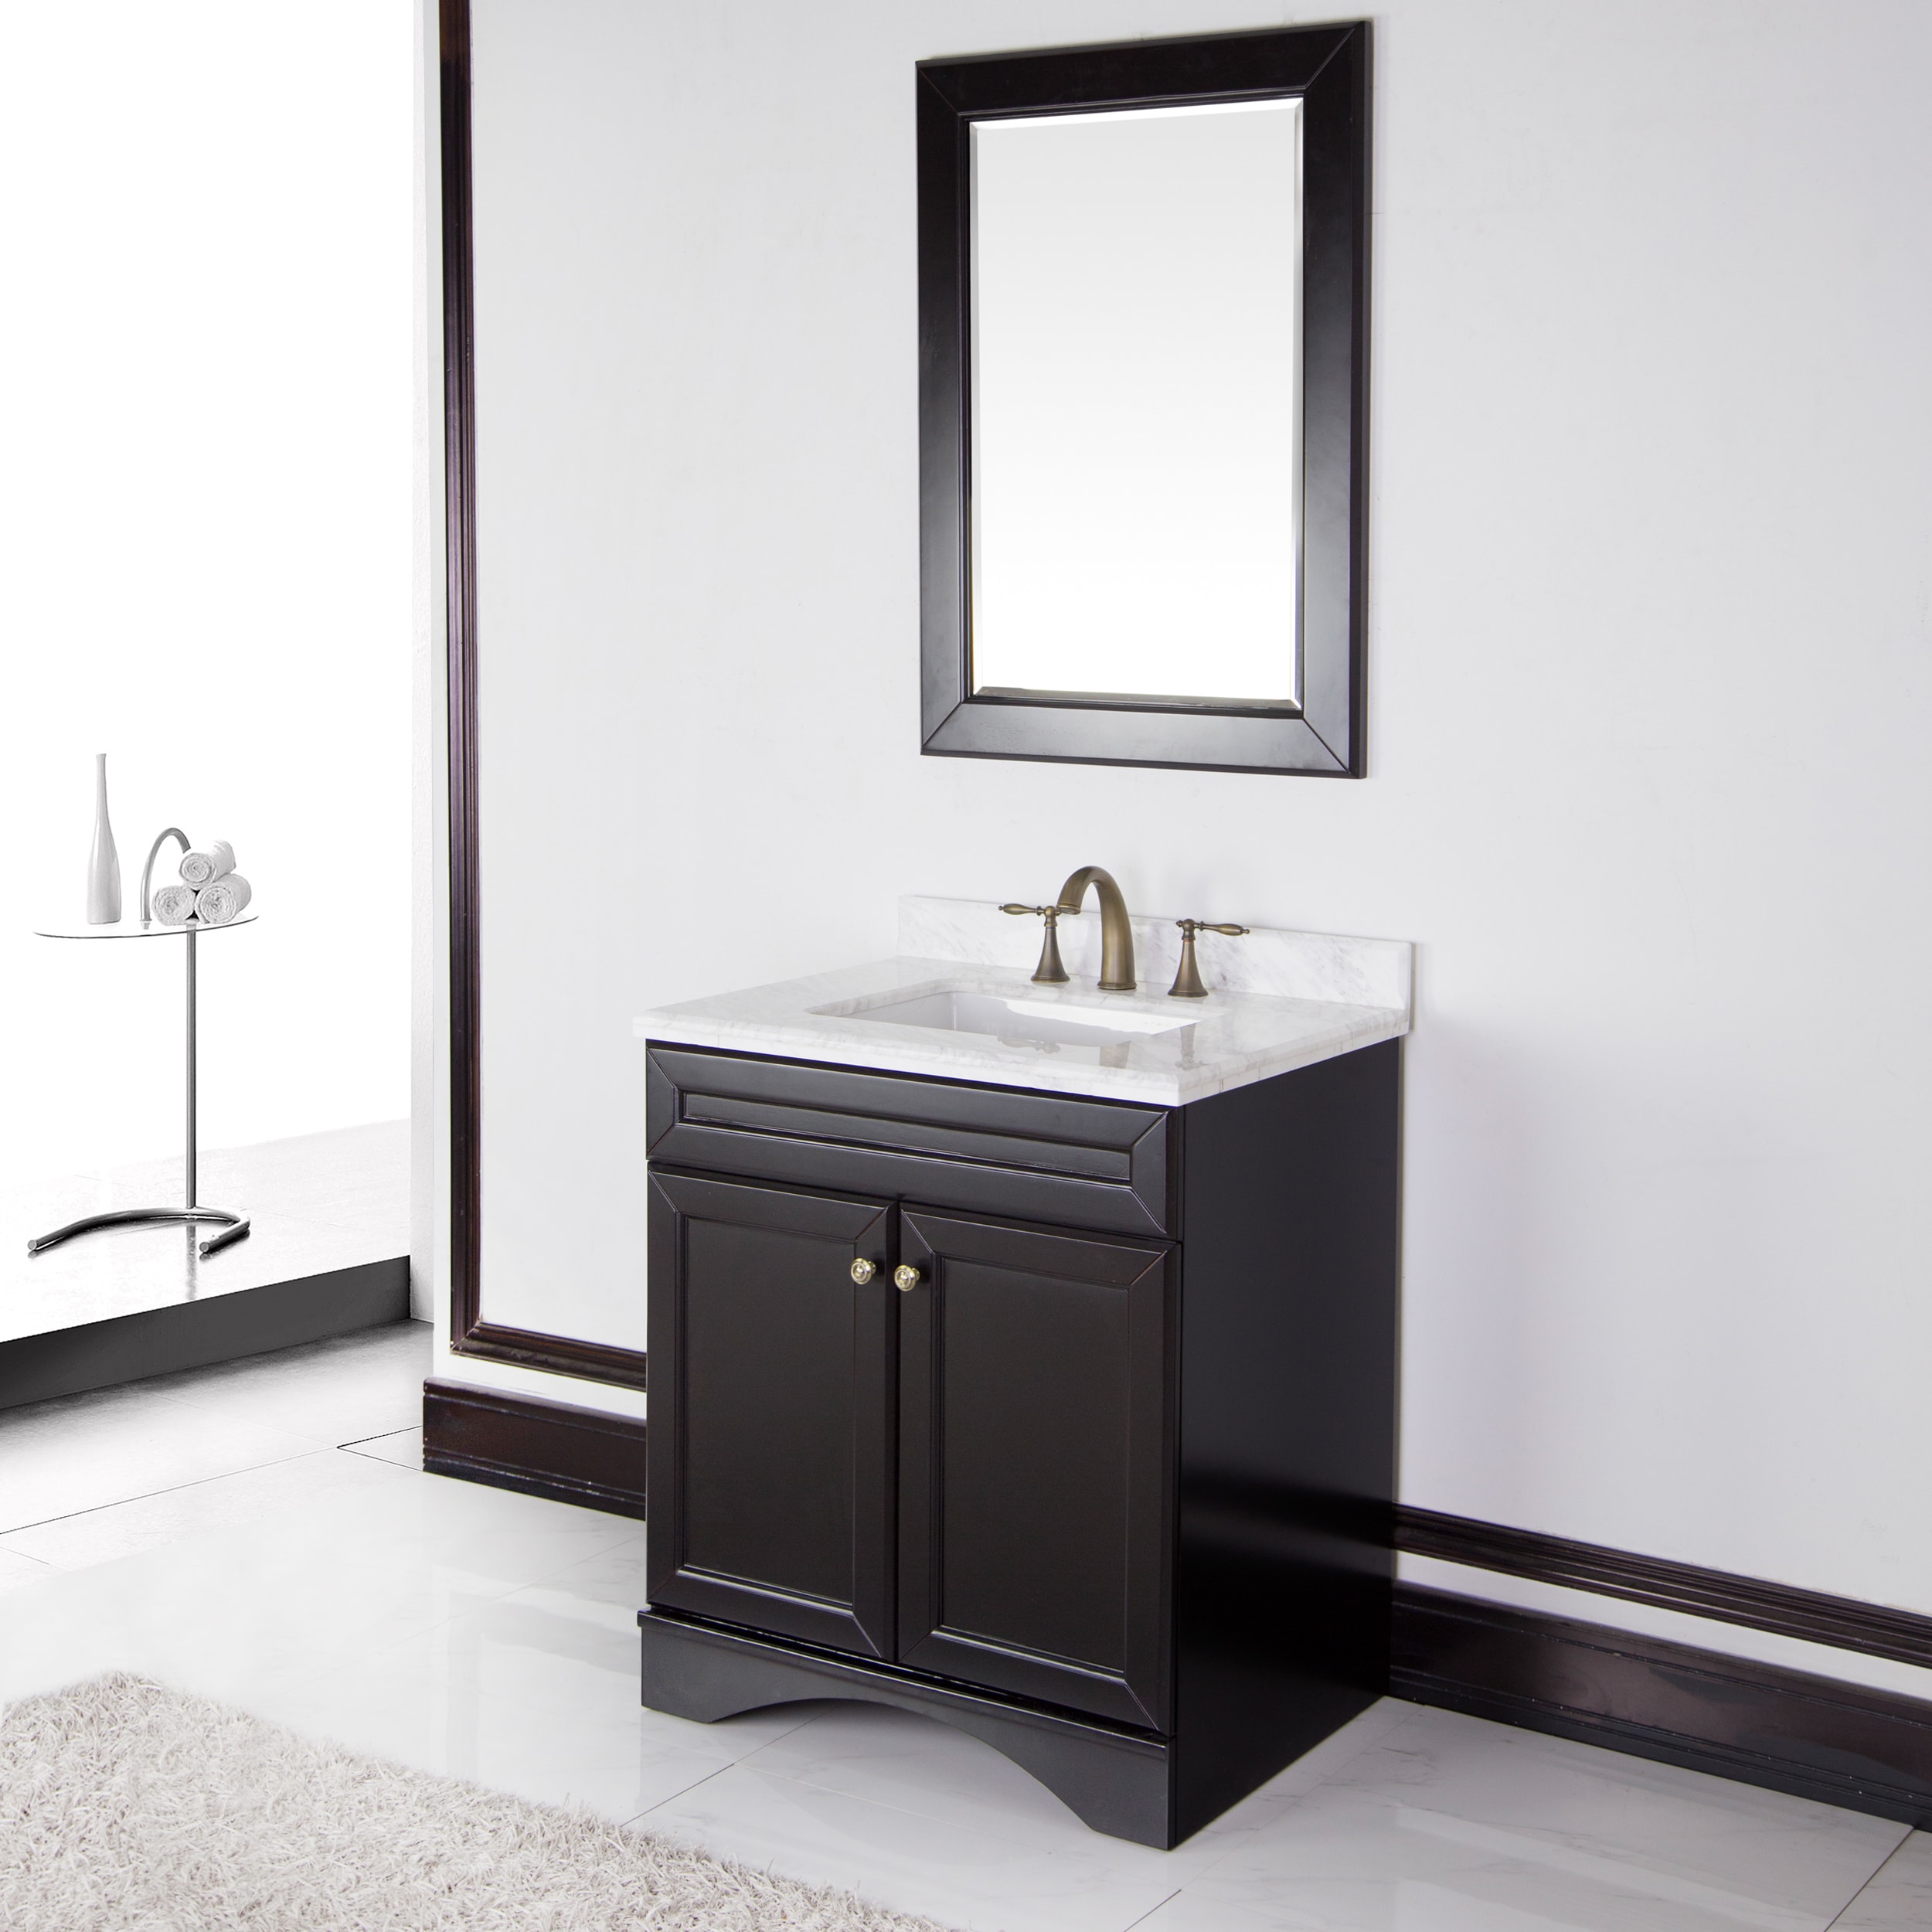 Espresso Cabinet/ Ivory Carrera Italian Marble Top 30 inch Bathroom Vanity By Sirio